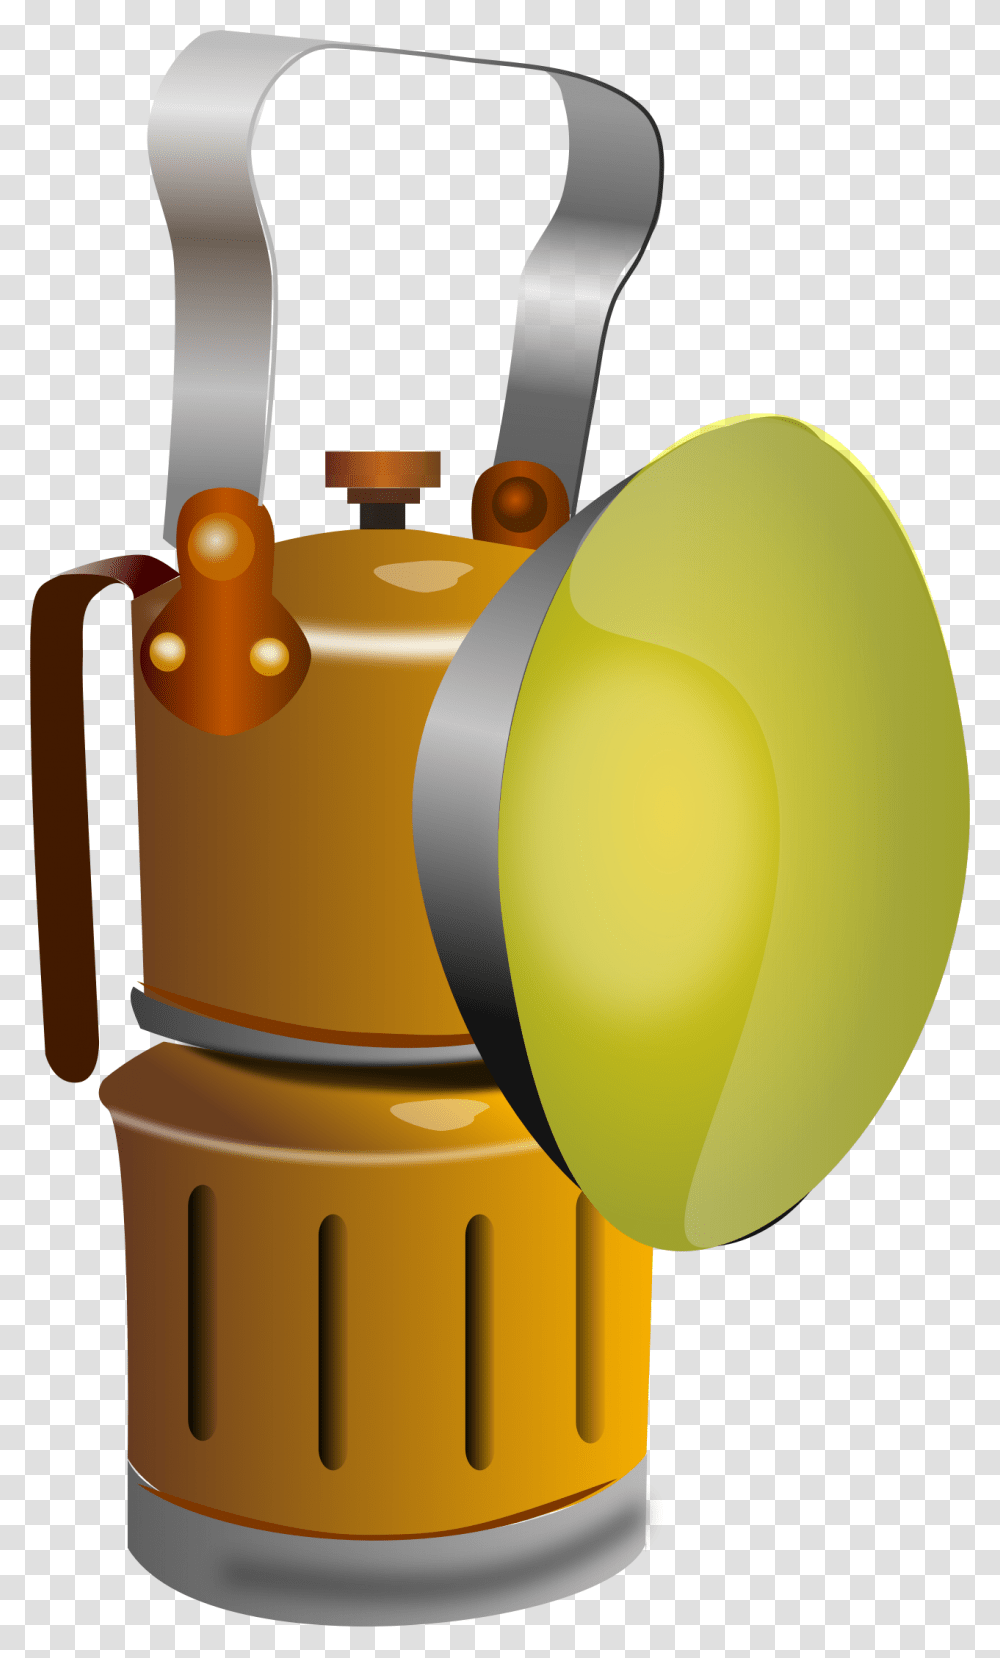 Genie Lamp Clipart Lampara Dibujos De Lamparas De Carburo, Barrel, Keg, Cylinder, Rain Barrel Transparent Png